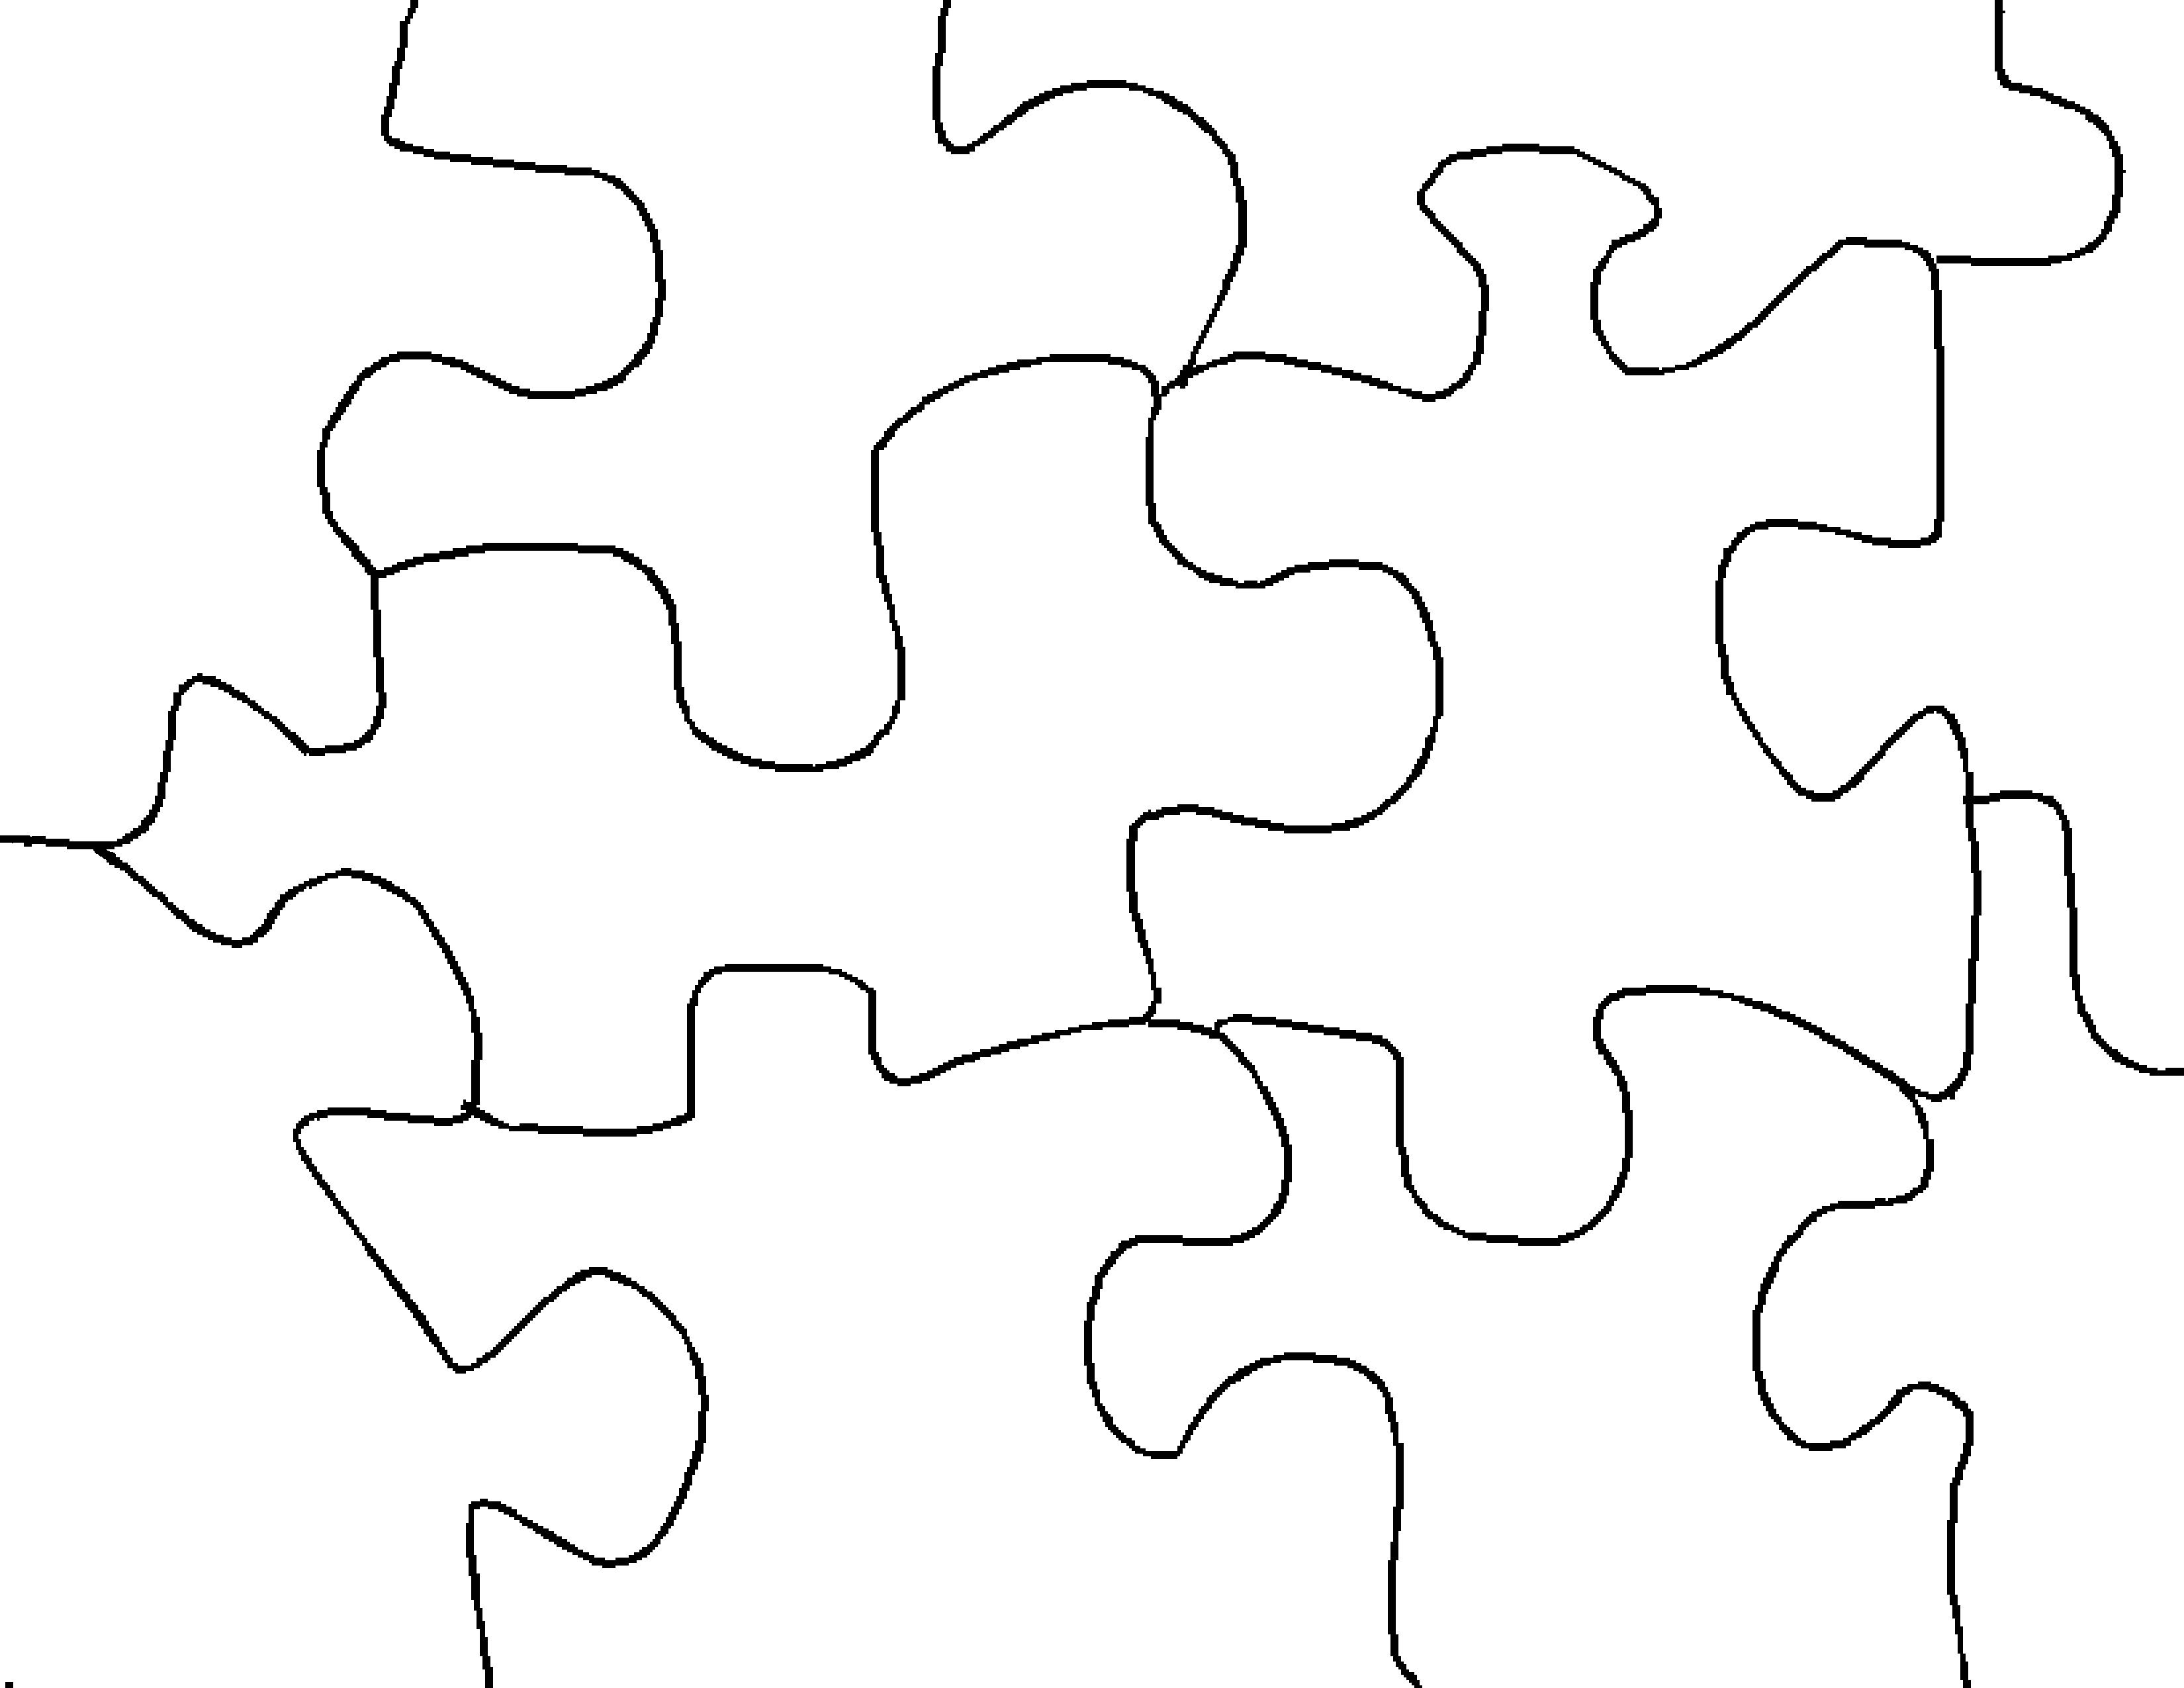 009 Blank Puzzle Pieces Template Best Ideas 9 Piece Jigsaw Pdf 6 6